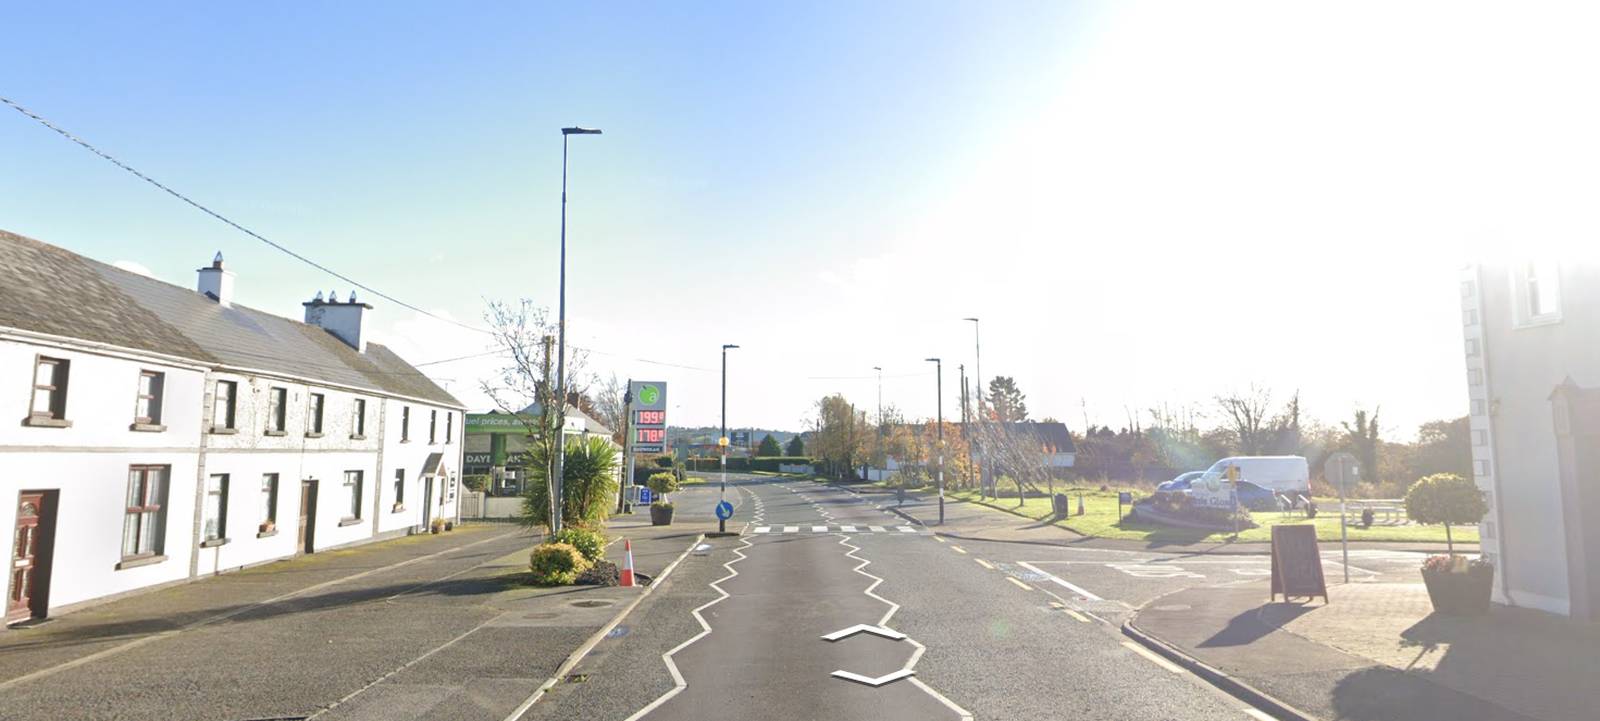 Ballinalack, Co Westmeath. Google Street View